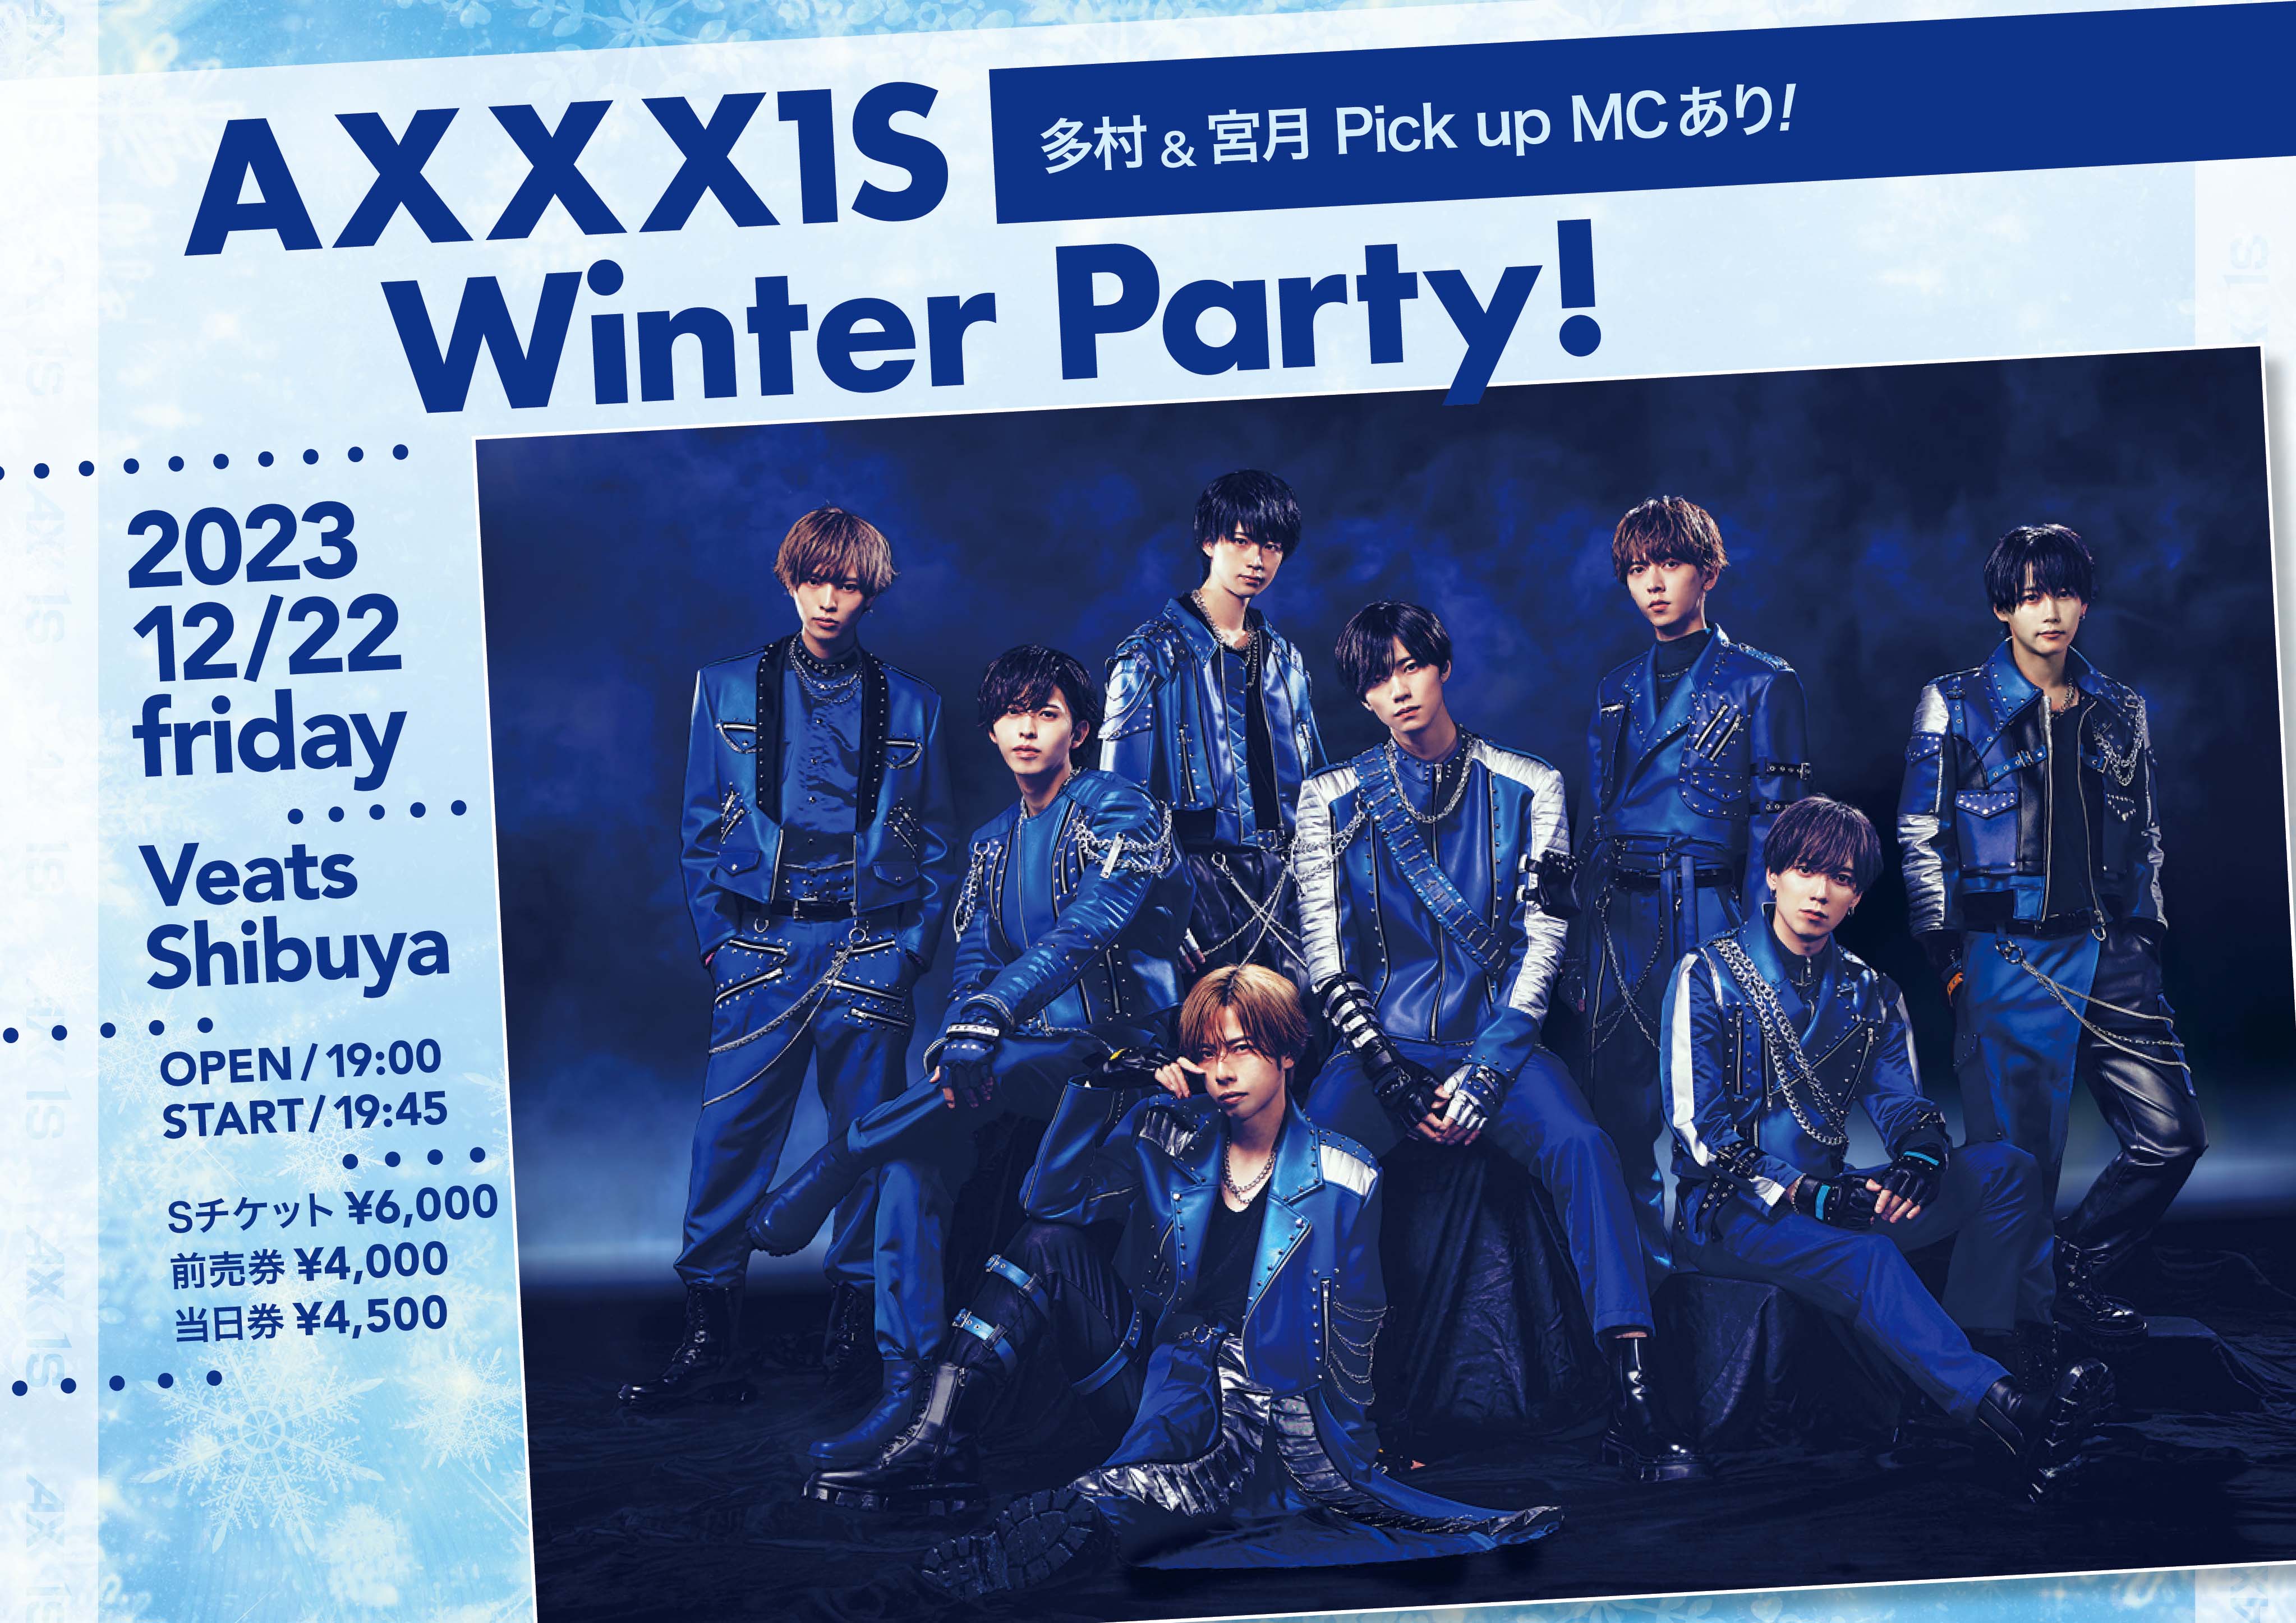 AXXX1S 12/22 AXXX1S Winter Party @Veats Shibuya